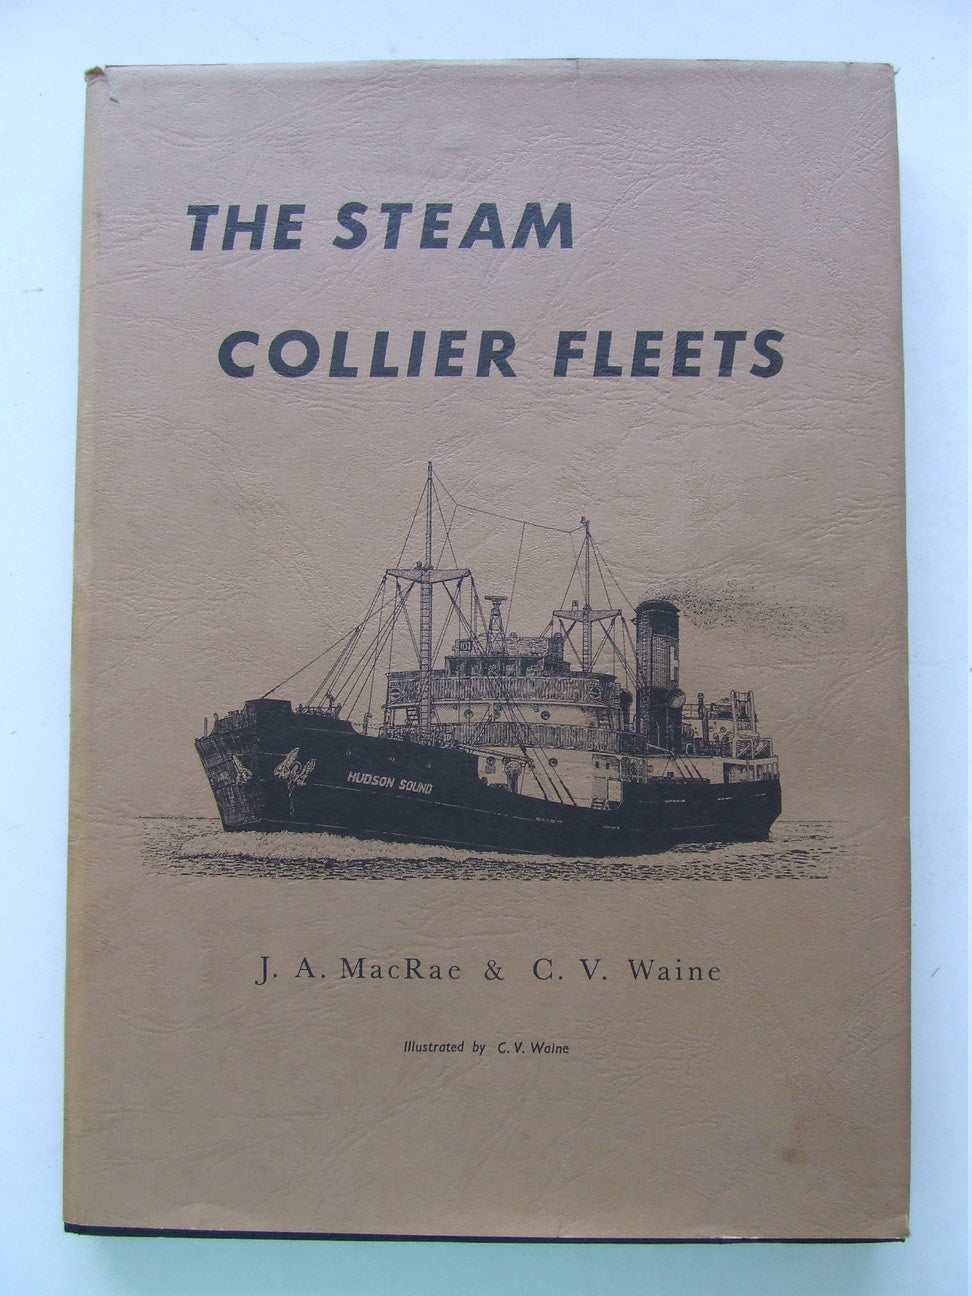 The Steam Collier Fleets